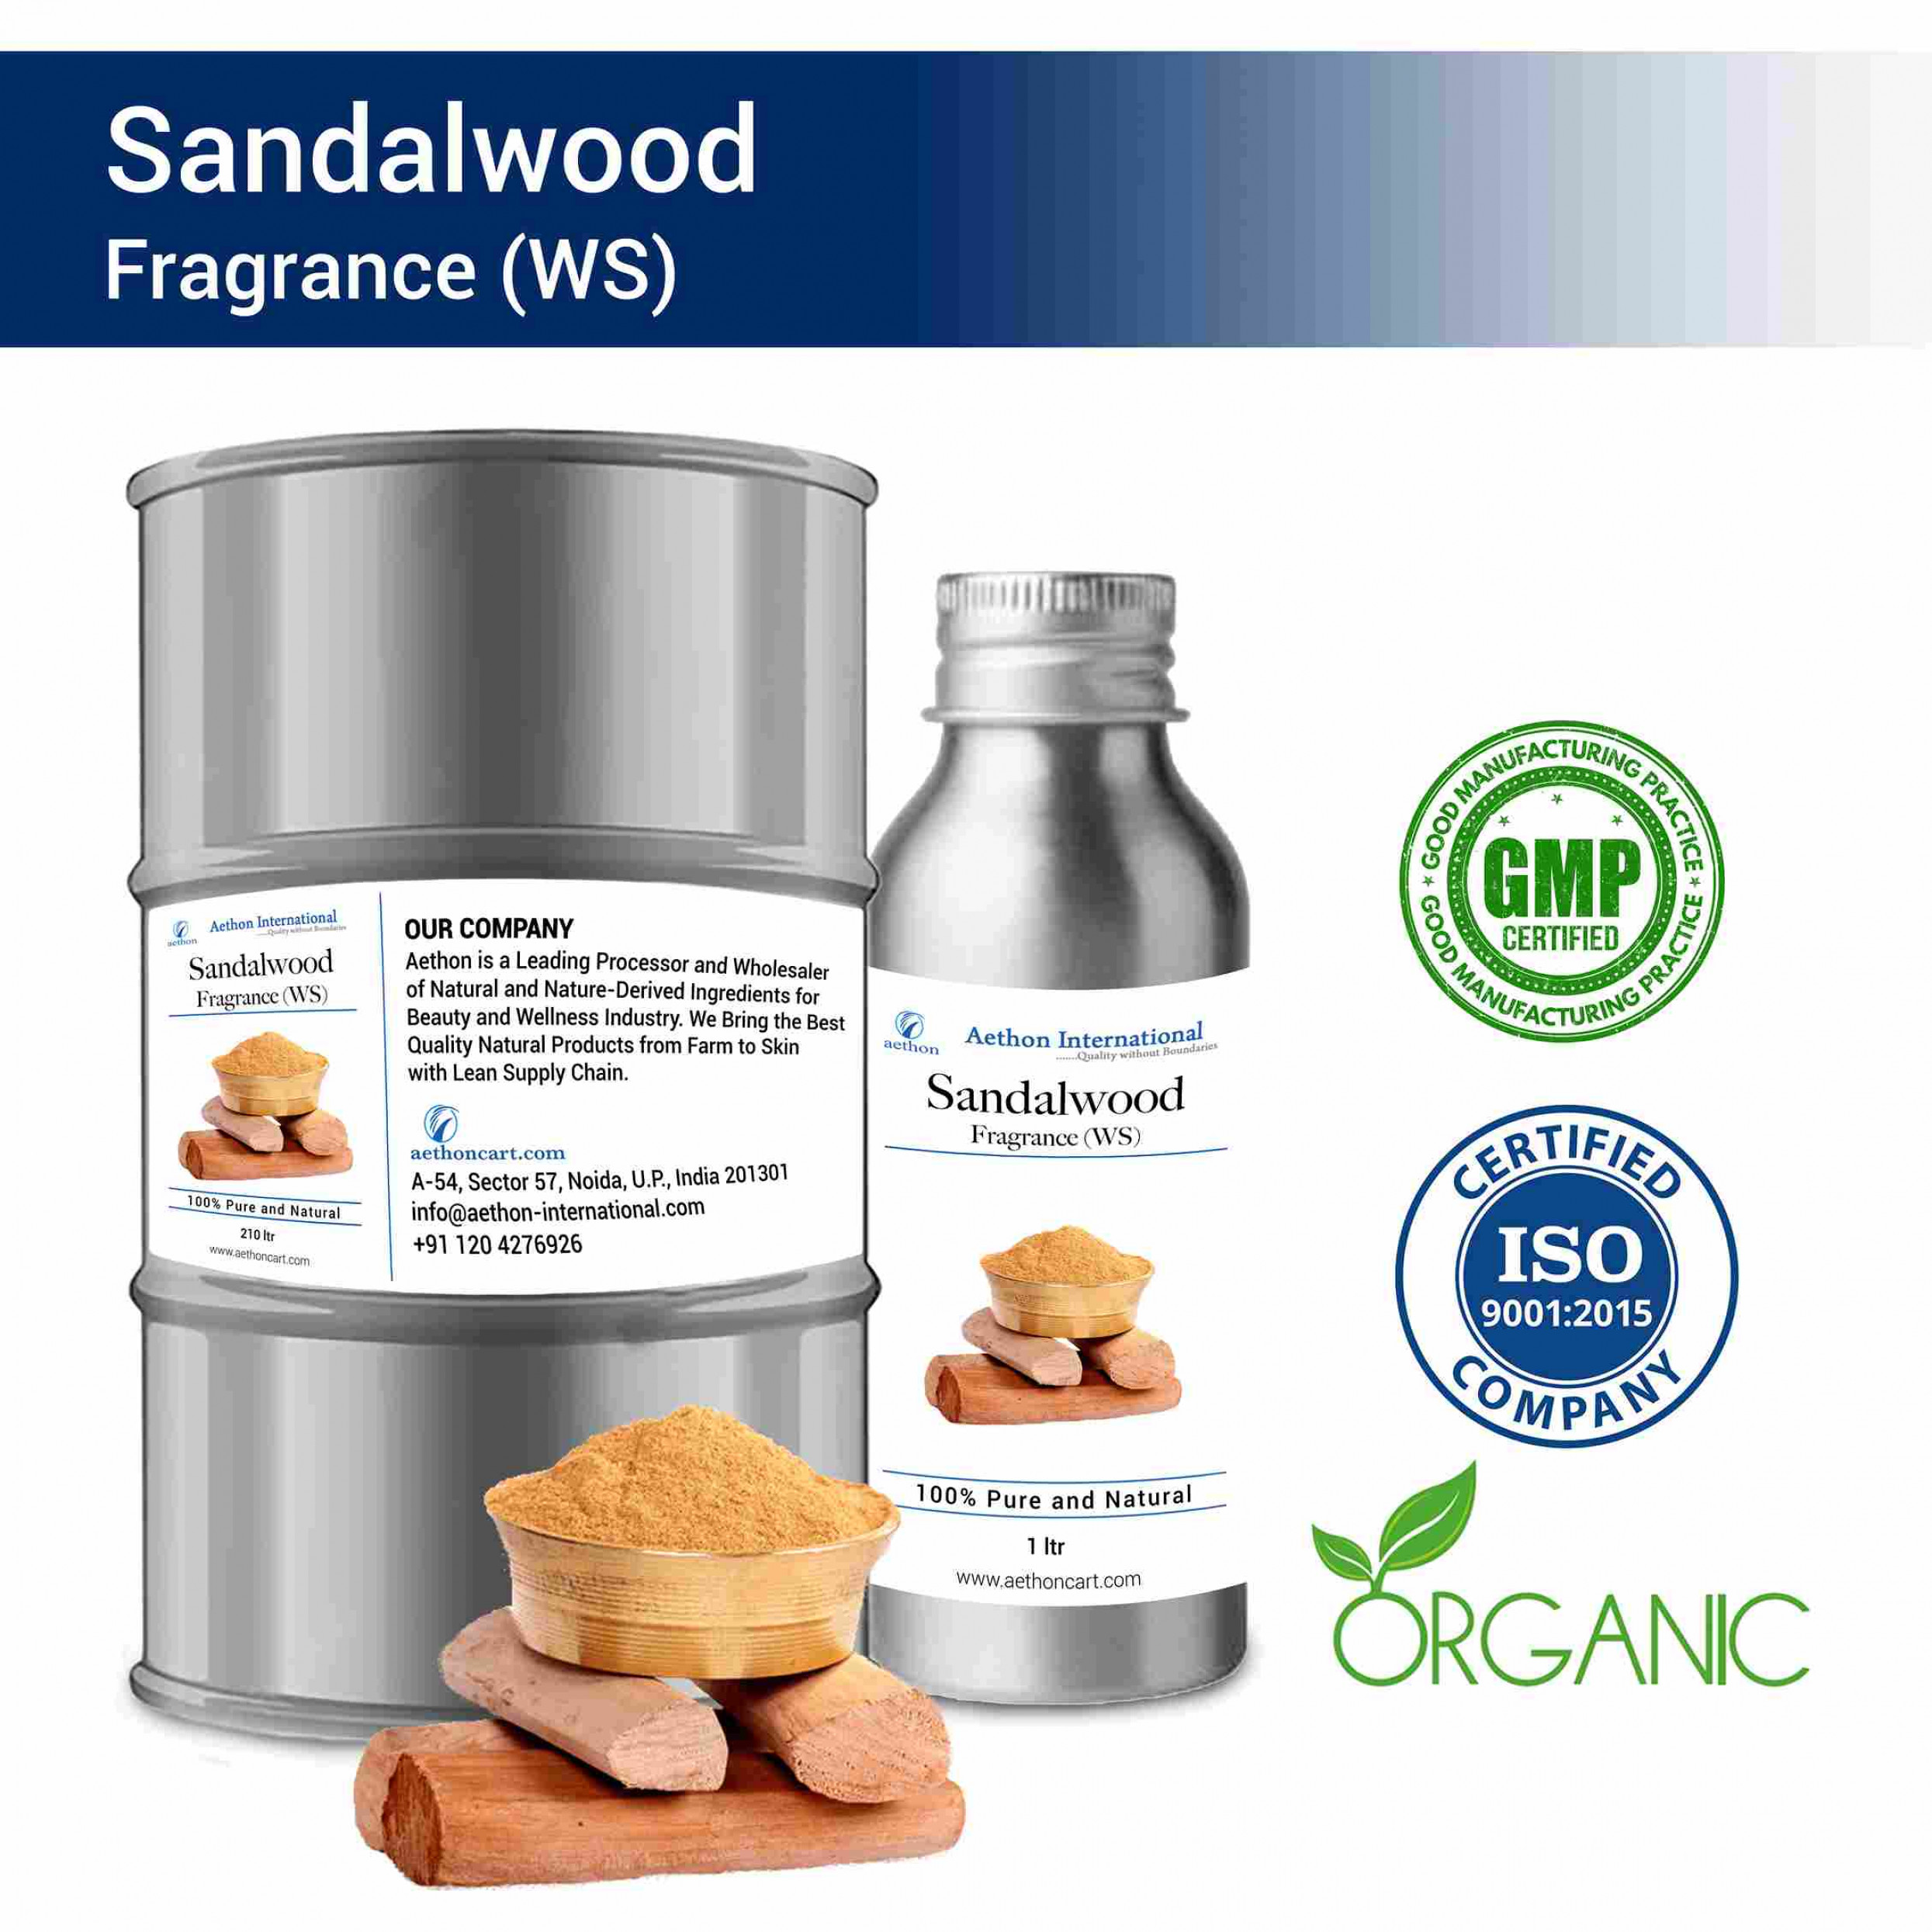 Sandalwood Fragrance (WS)